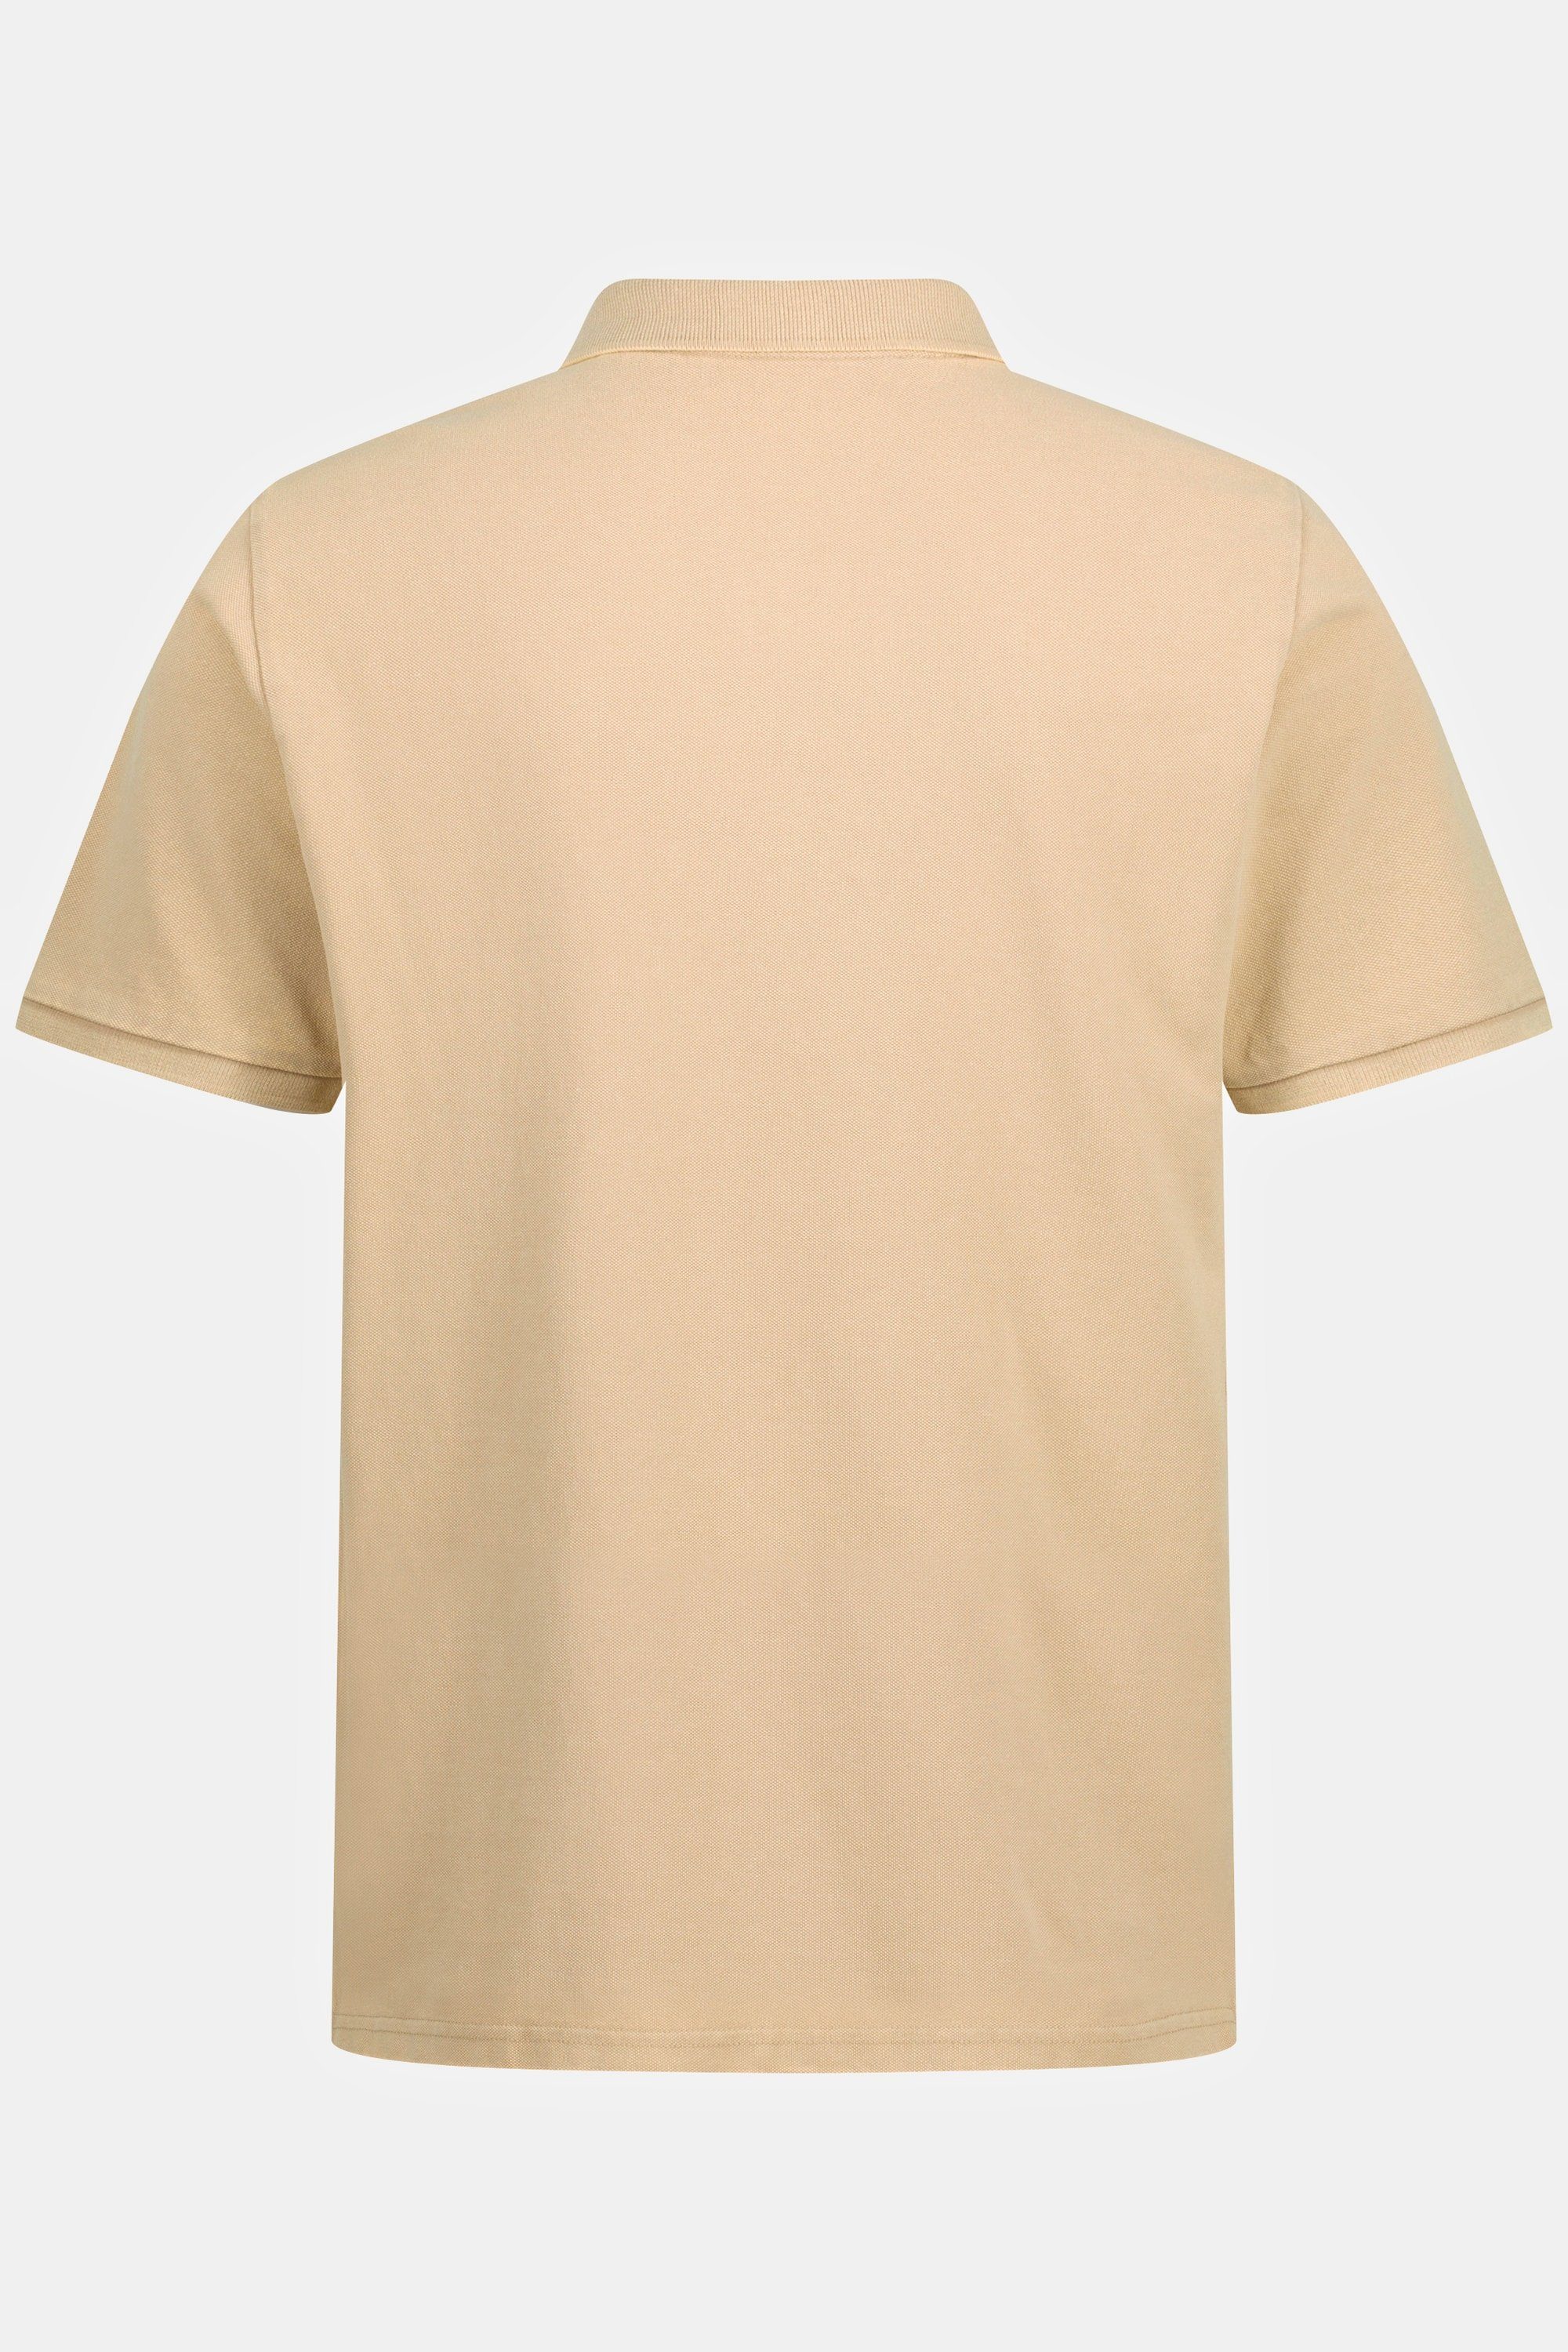 JP1880 Poloshirt Poloshirt Piqué Vintage Halbarm beige Waschung